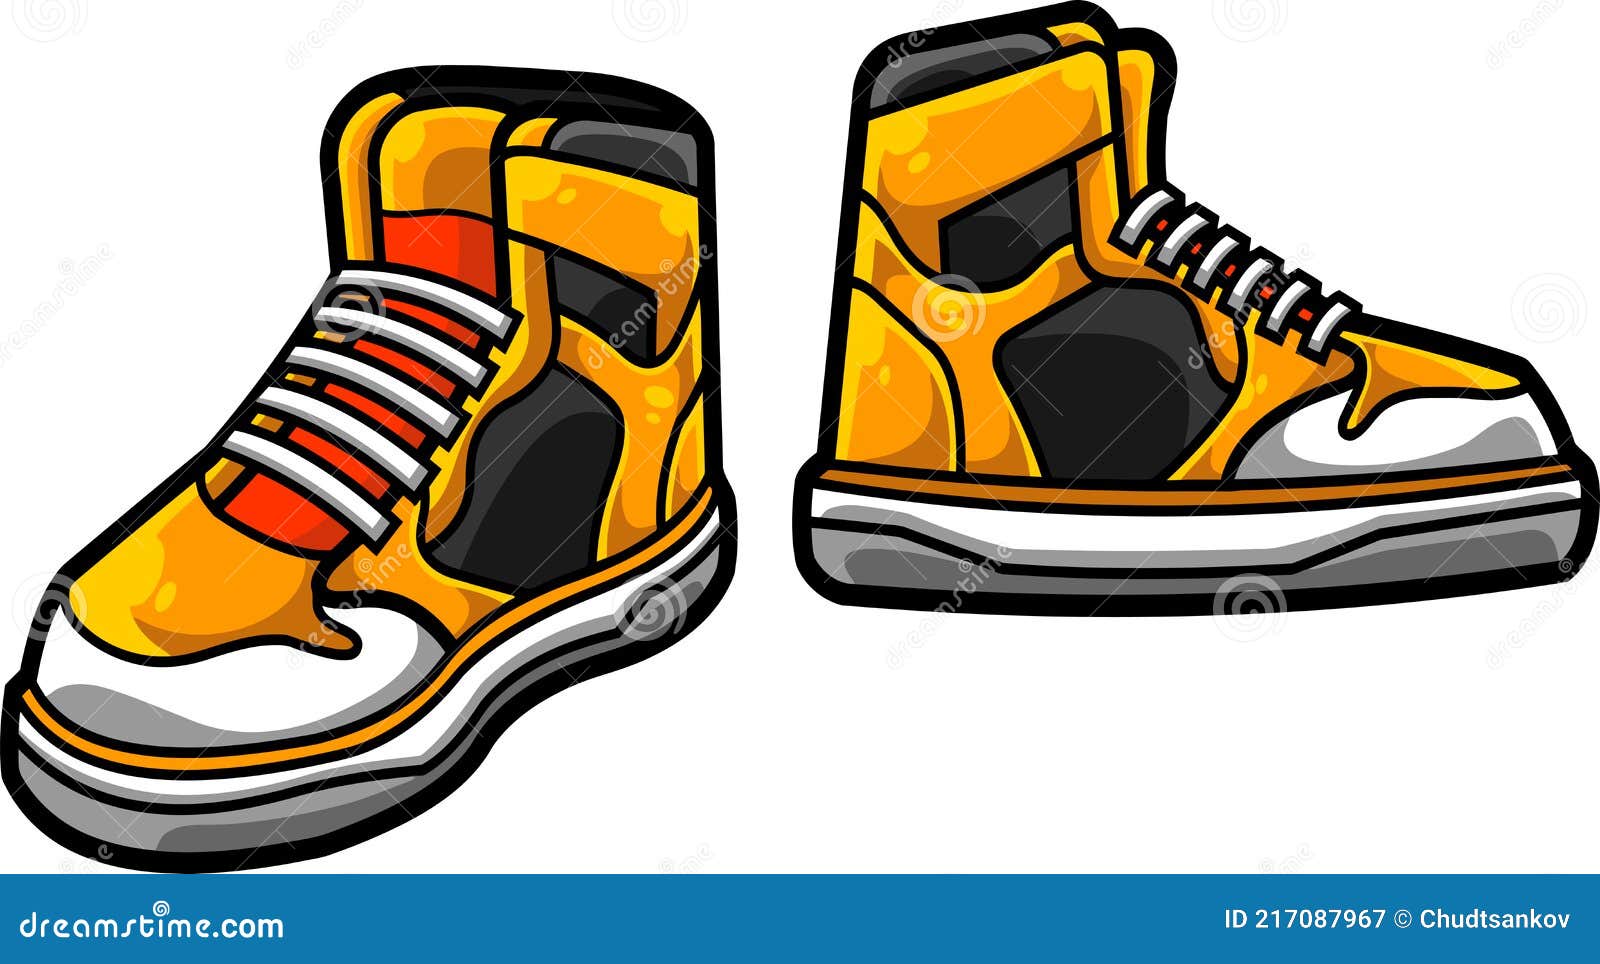 Cartoon Modern Sneakers stock vector. Illustration of athlete - 217087967